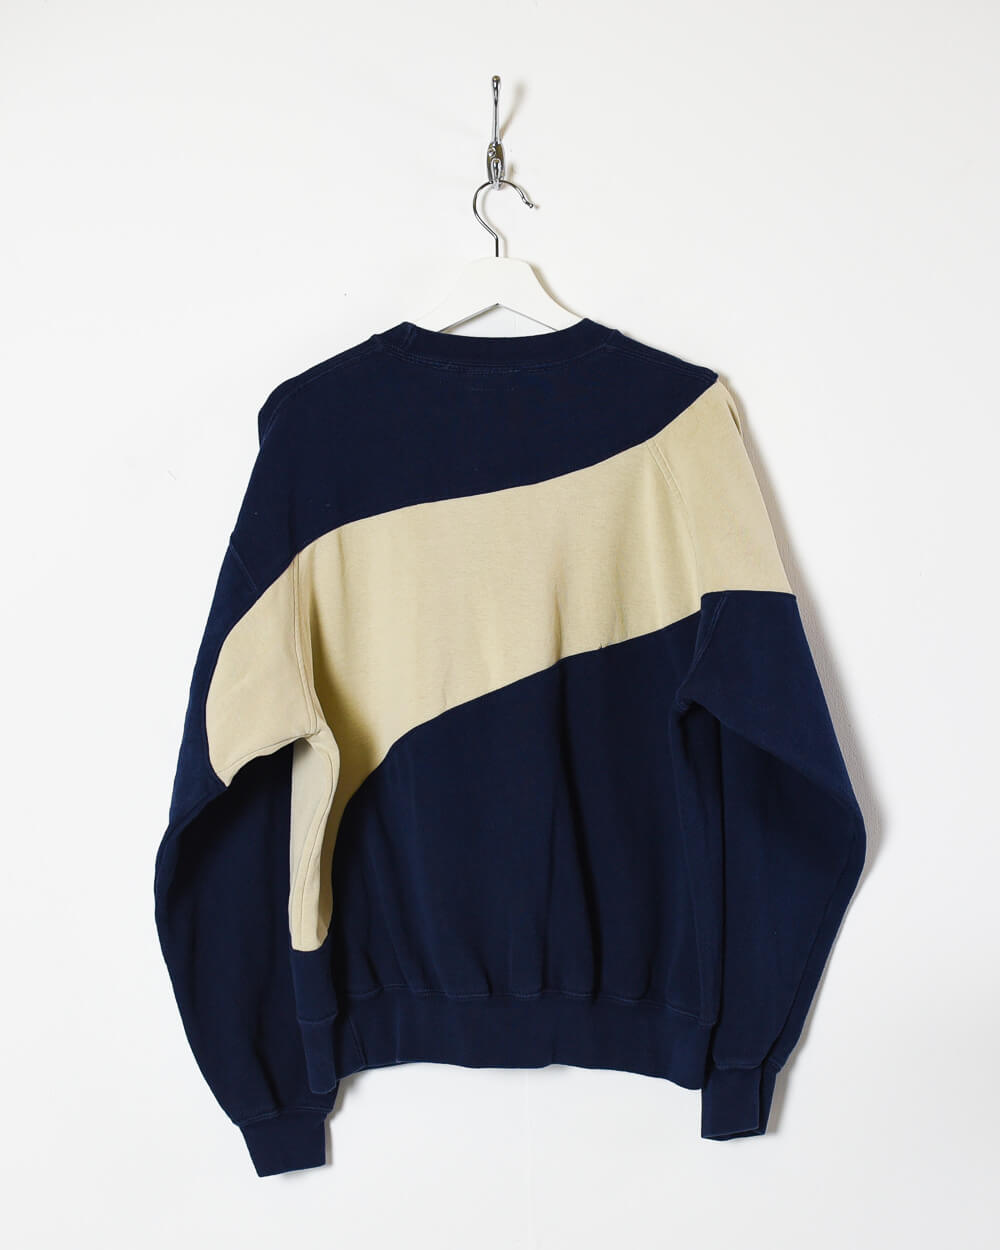 Navy Fila Rework Sweatshirt - Medium